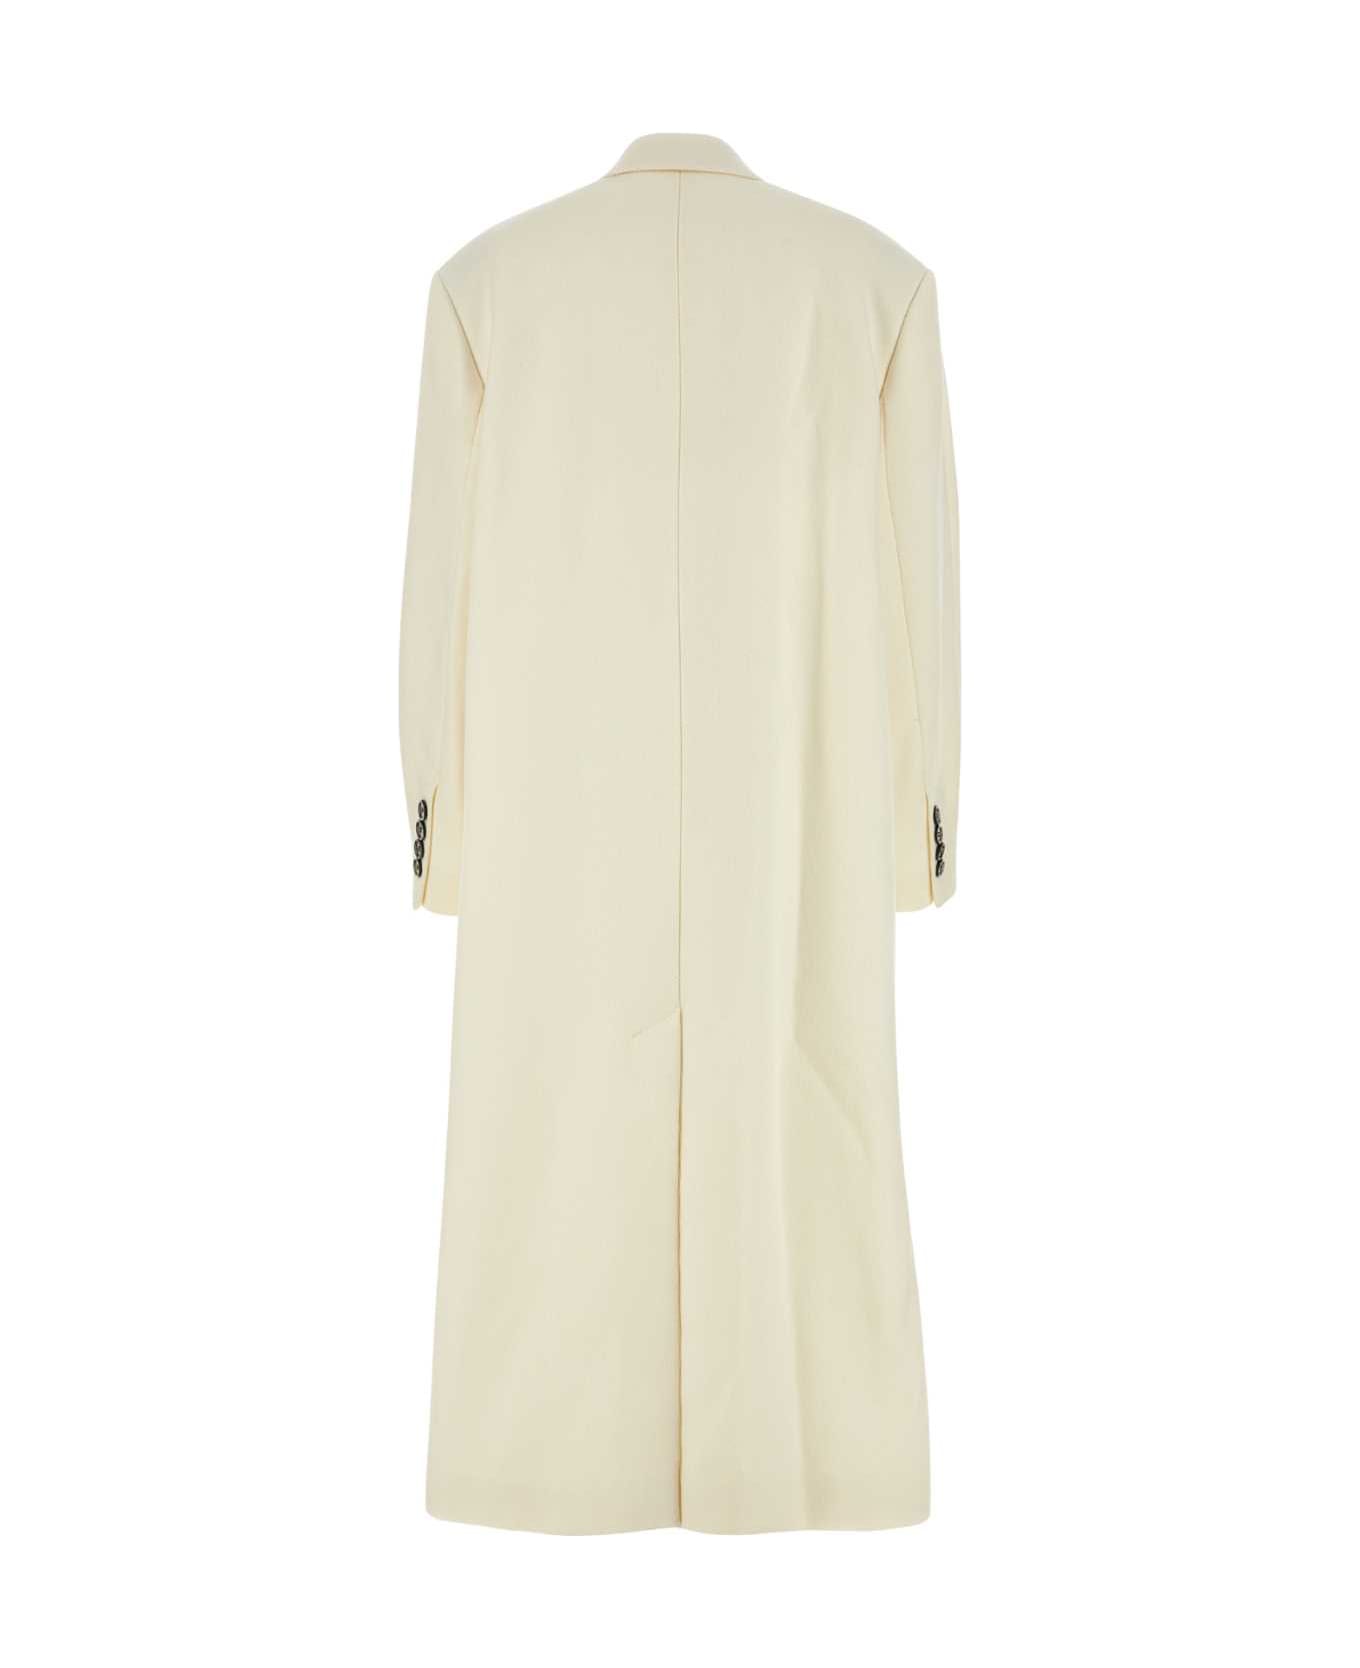 Ami Alexandre Mattiussi Ivory Wool Blend Oversize Coat - White レインコート